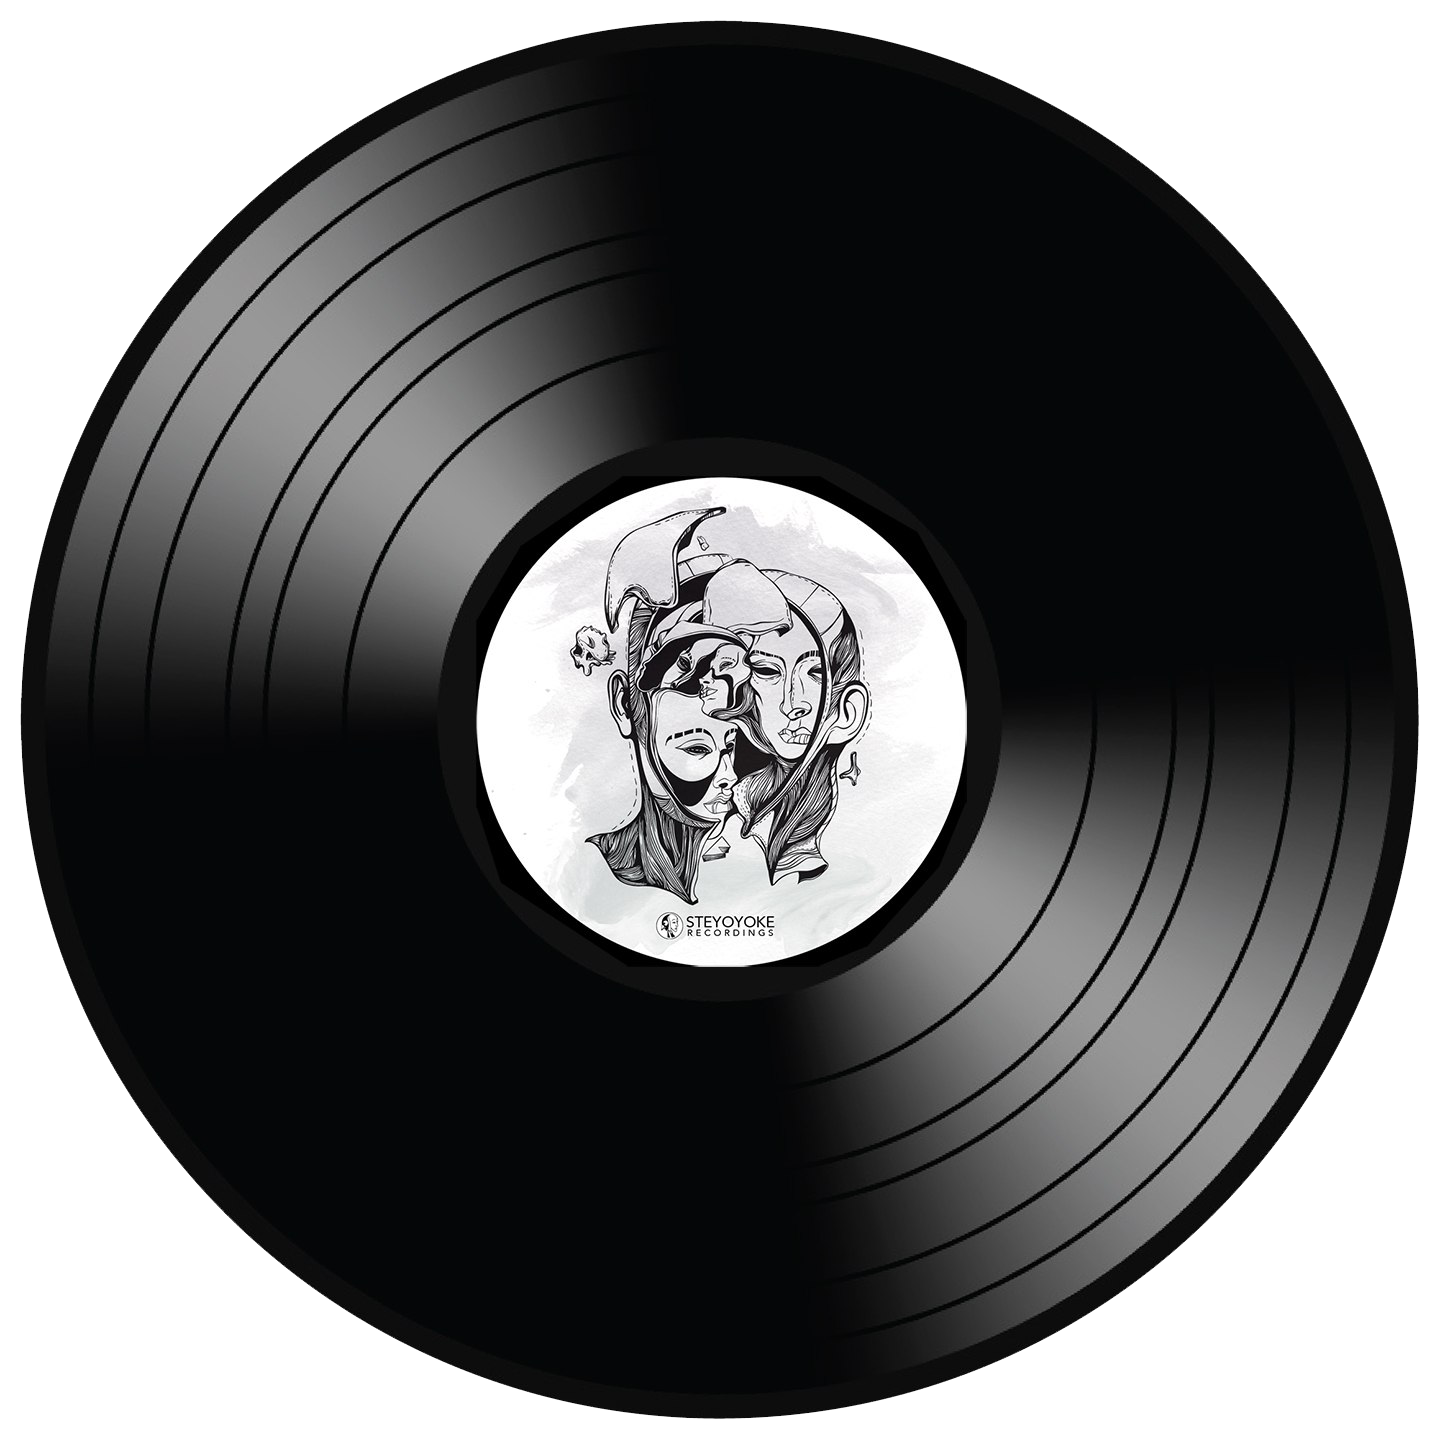 Vinyl Disk Free PNG Image